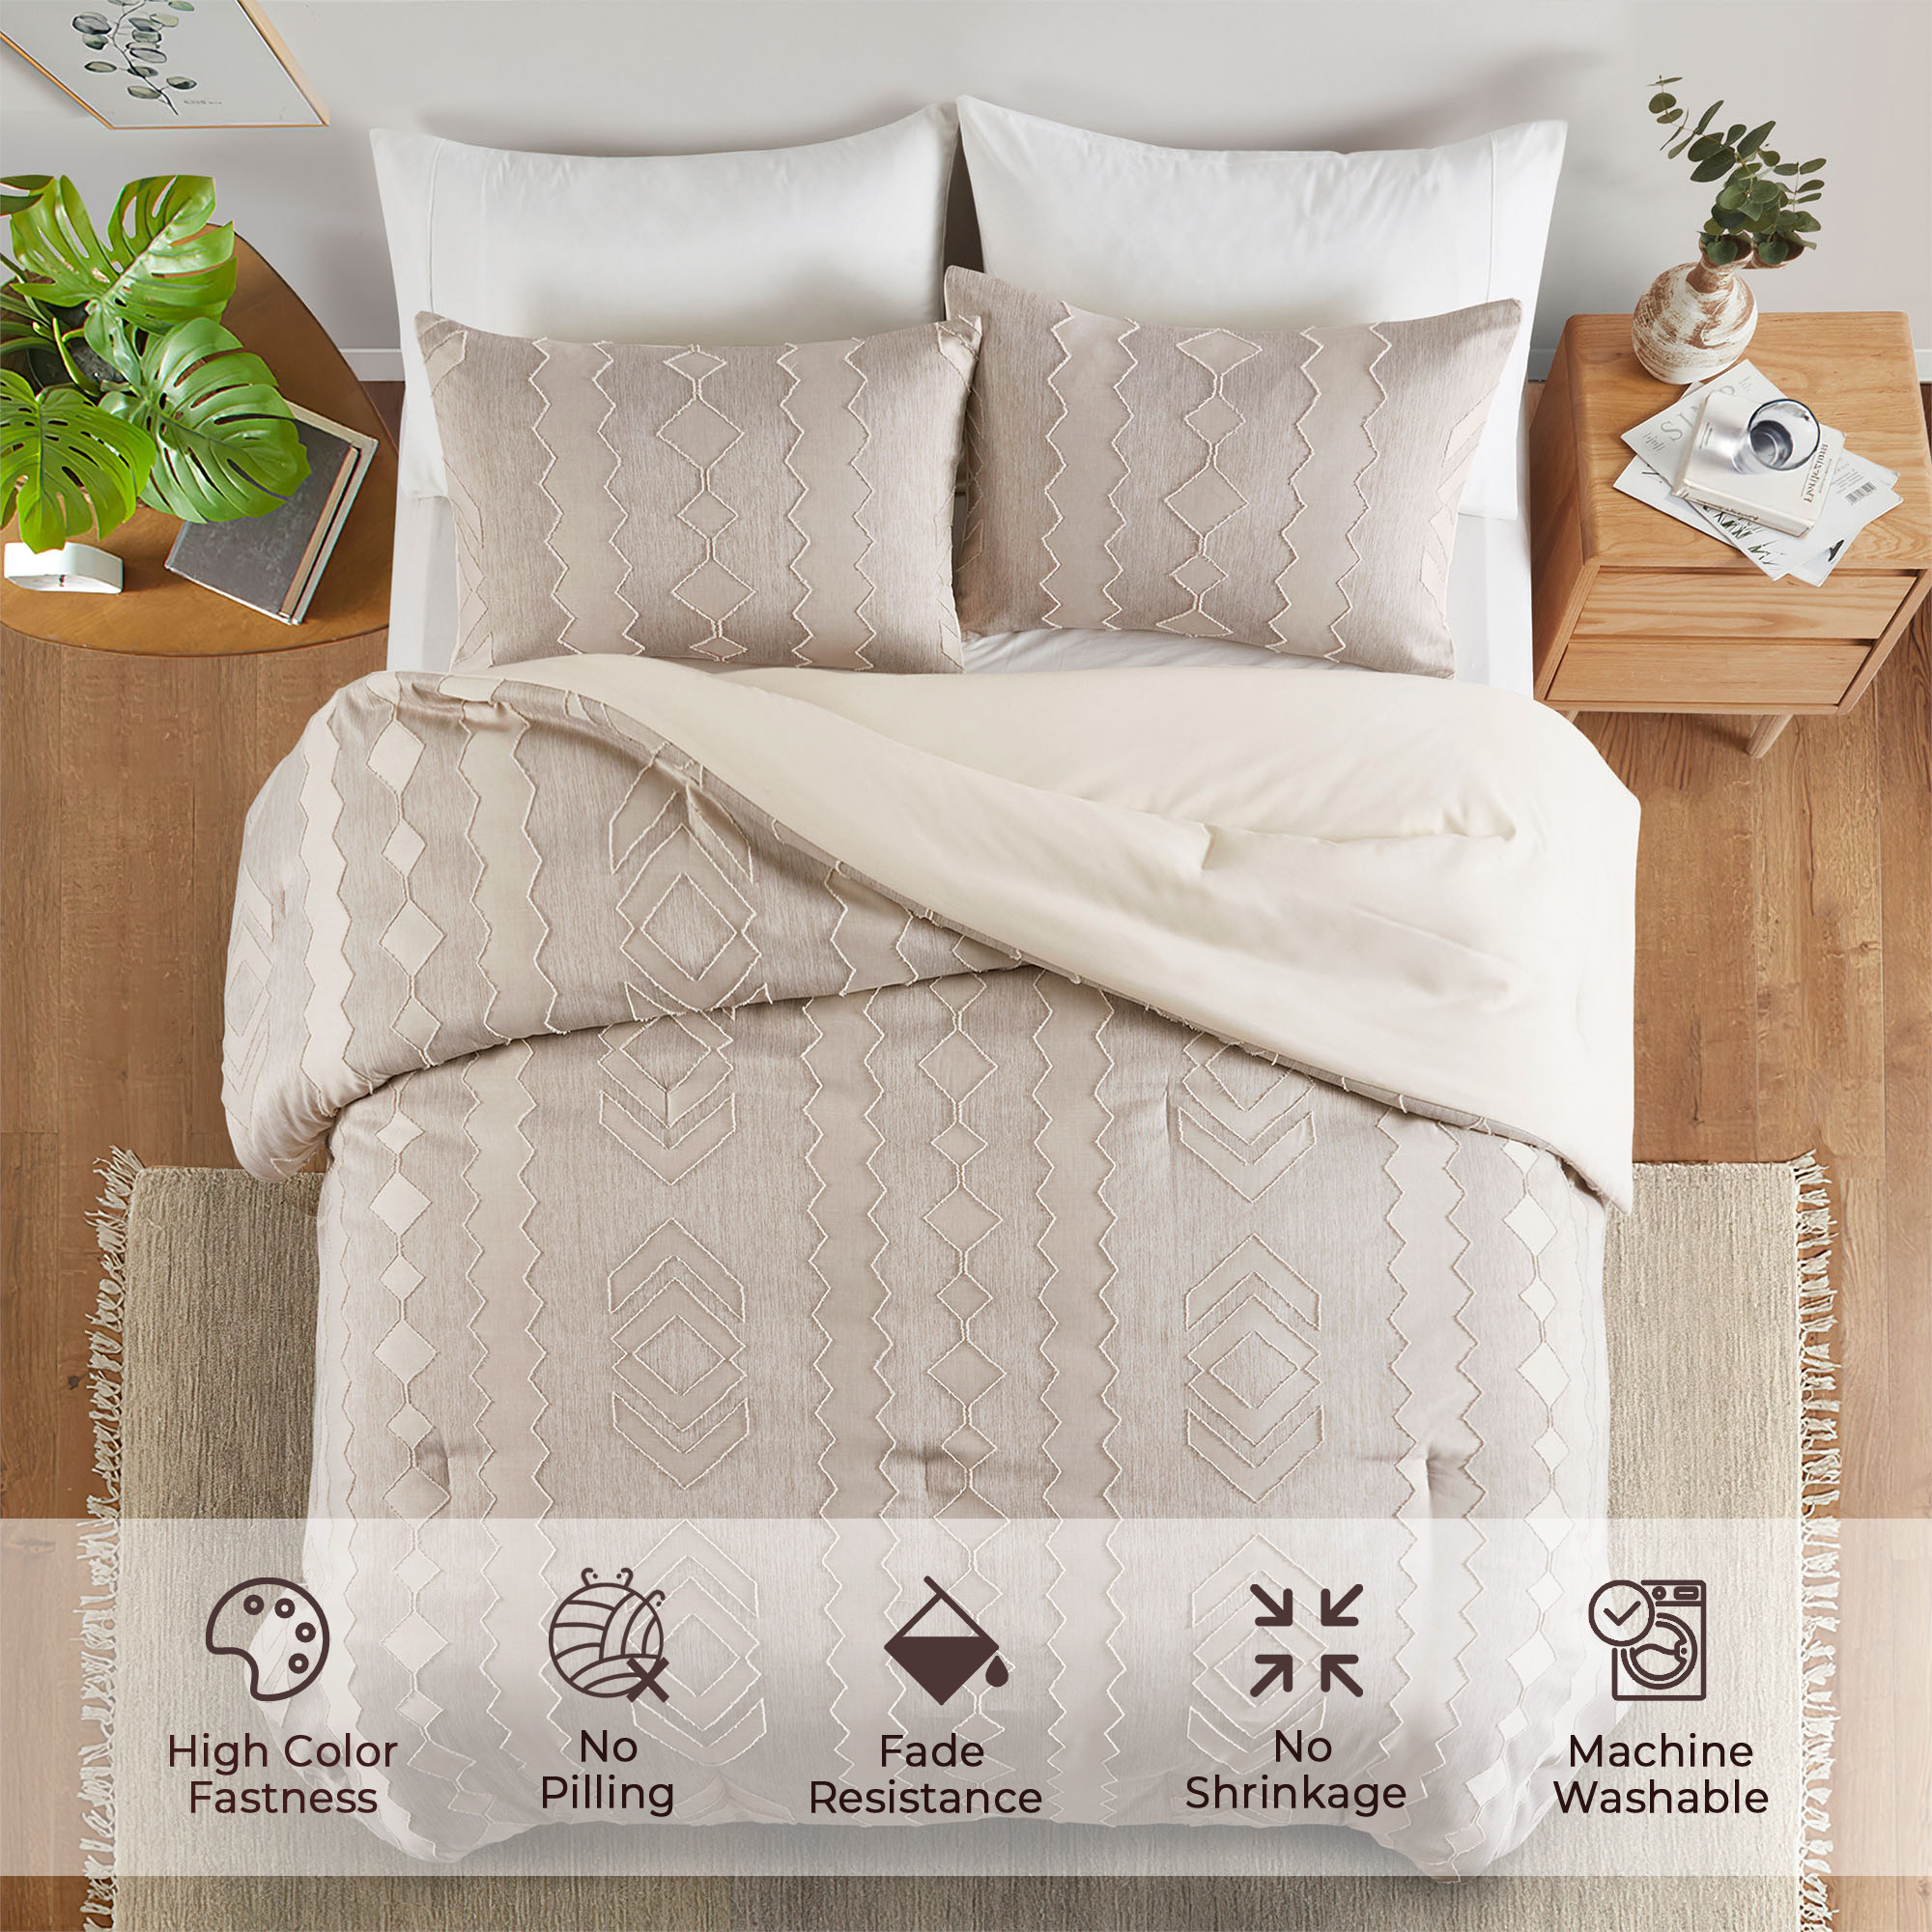 All-Season Comforter Set - Reversible Bedding Set With Super Soft Down Alternative Fill - King Size